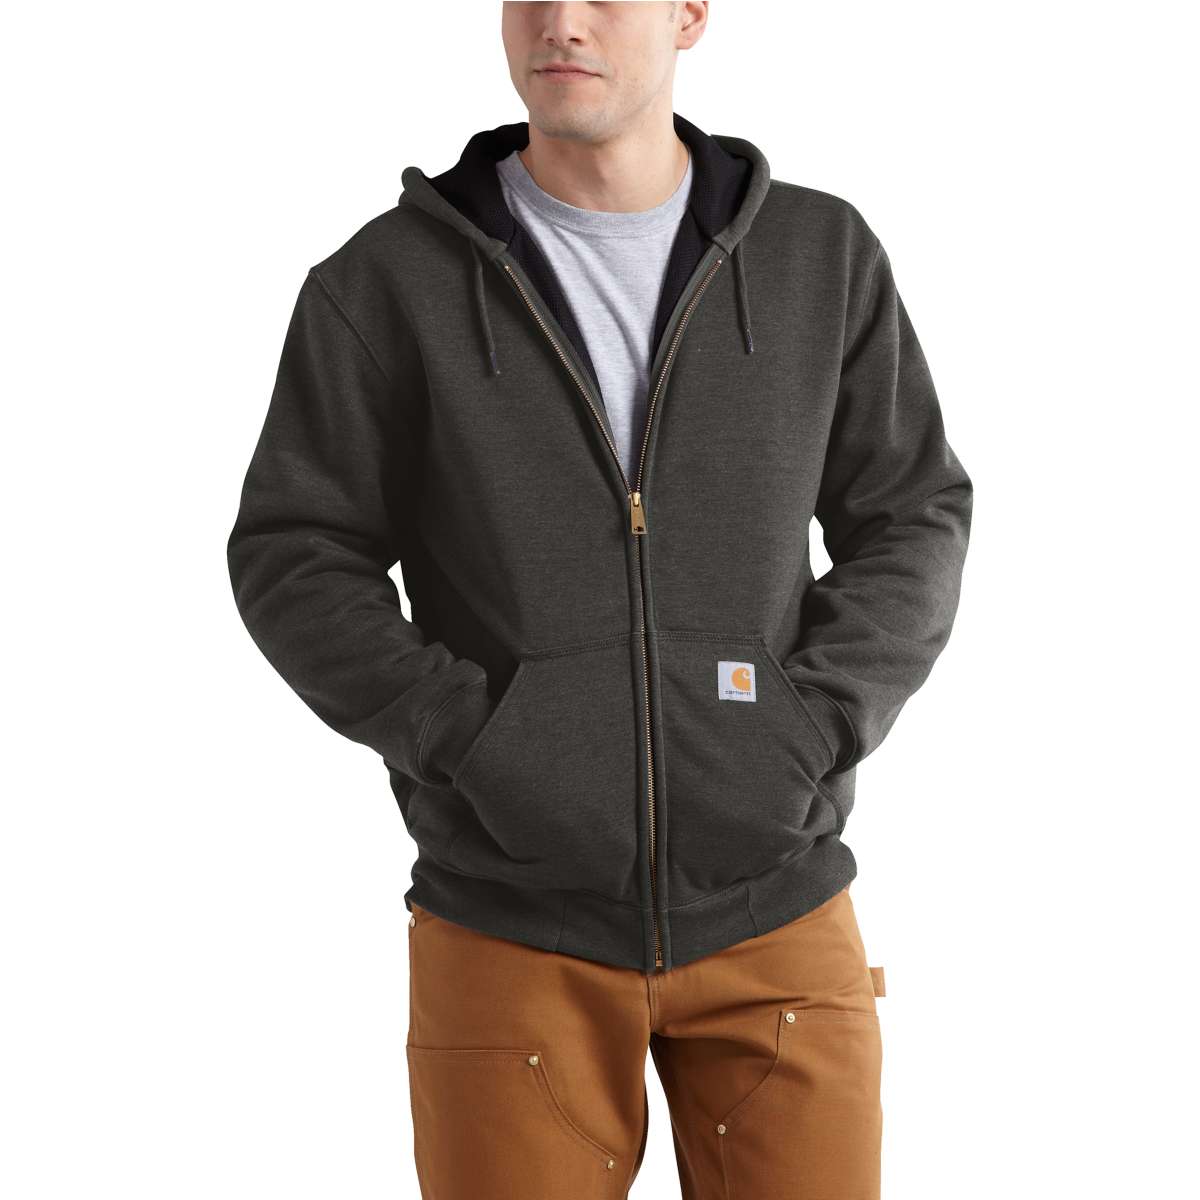 100632 - Carhartt Rutland Thermal Lined Zip Front Hooded Sweatshirt